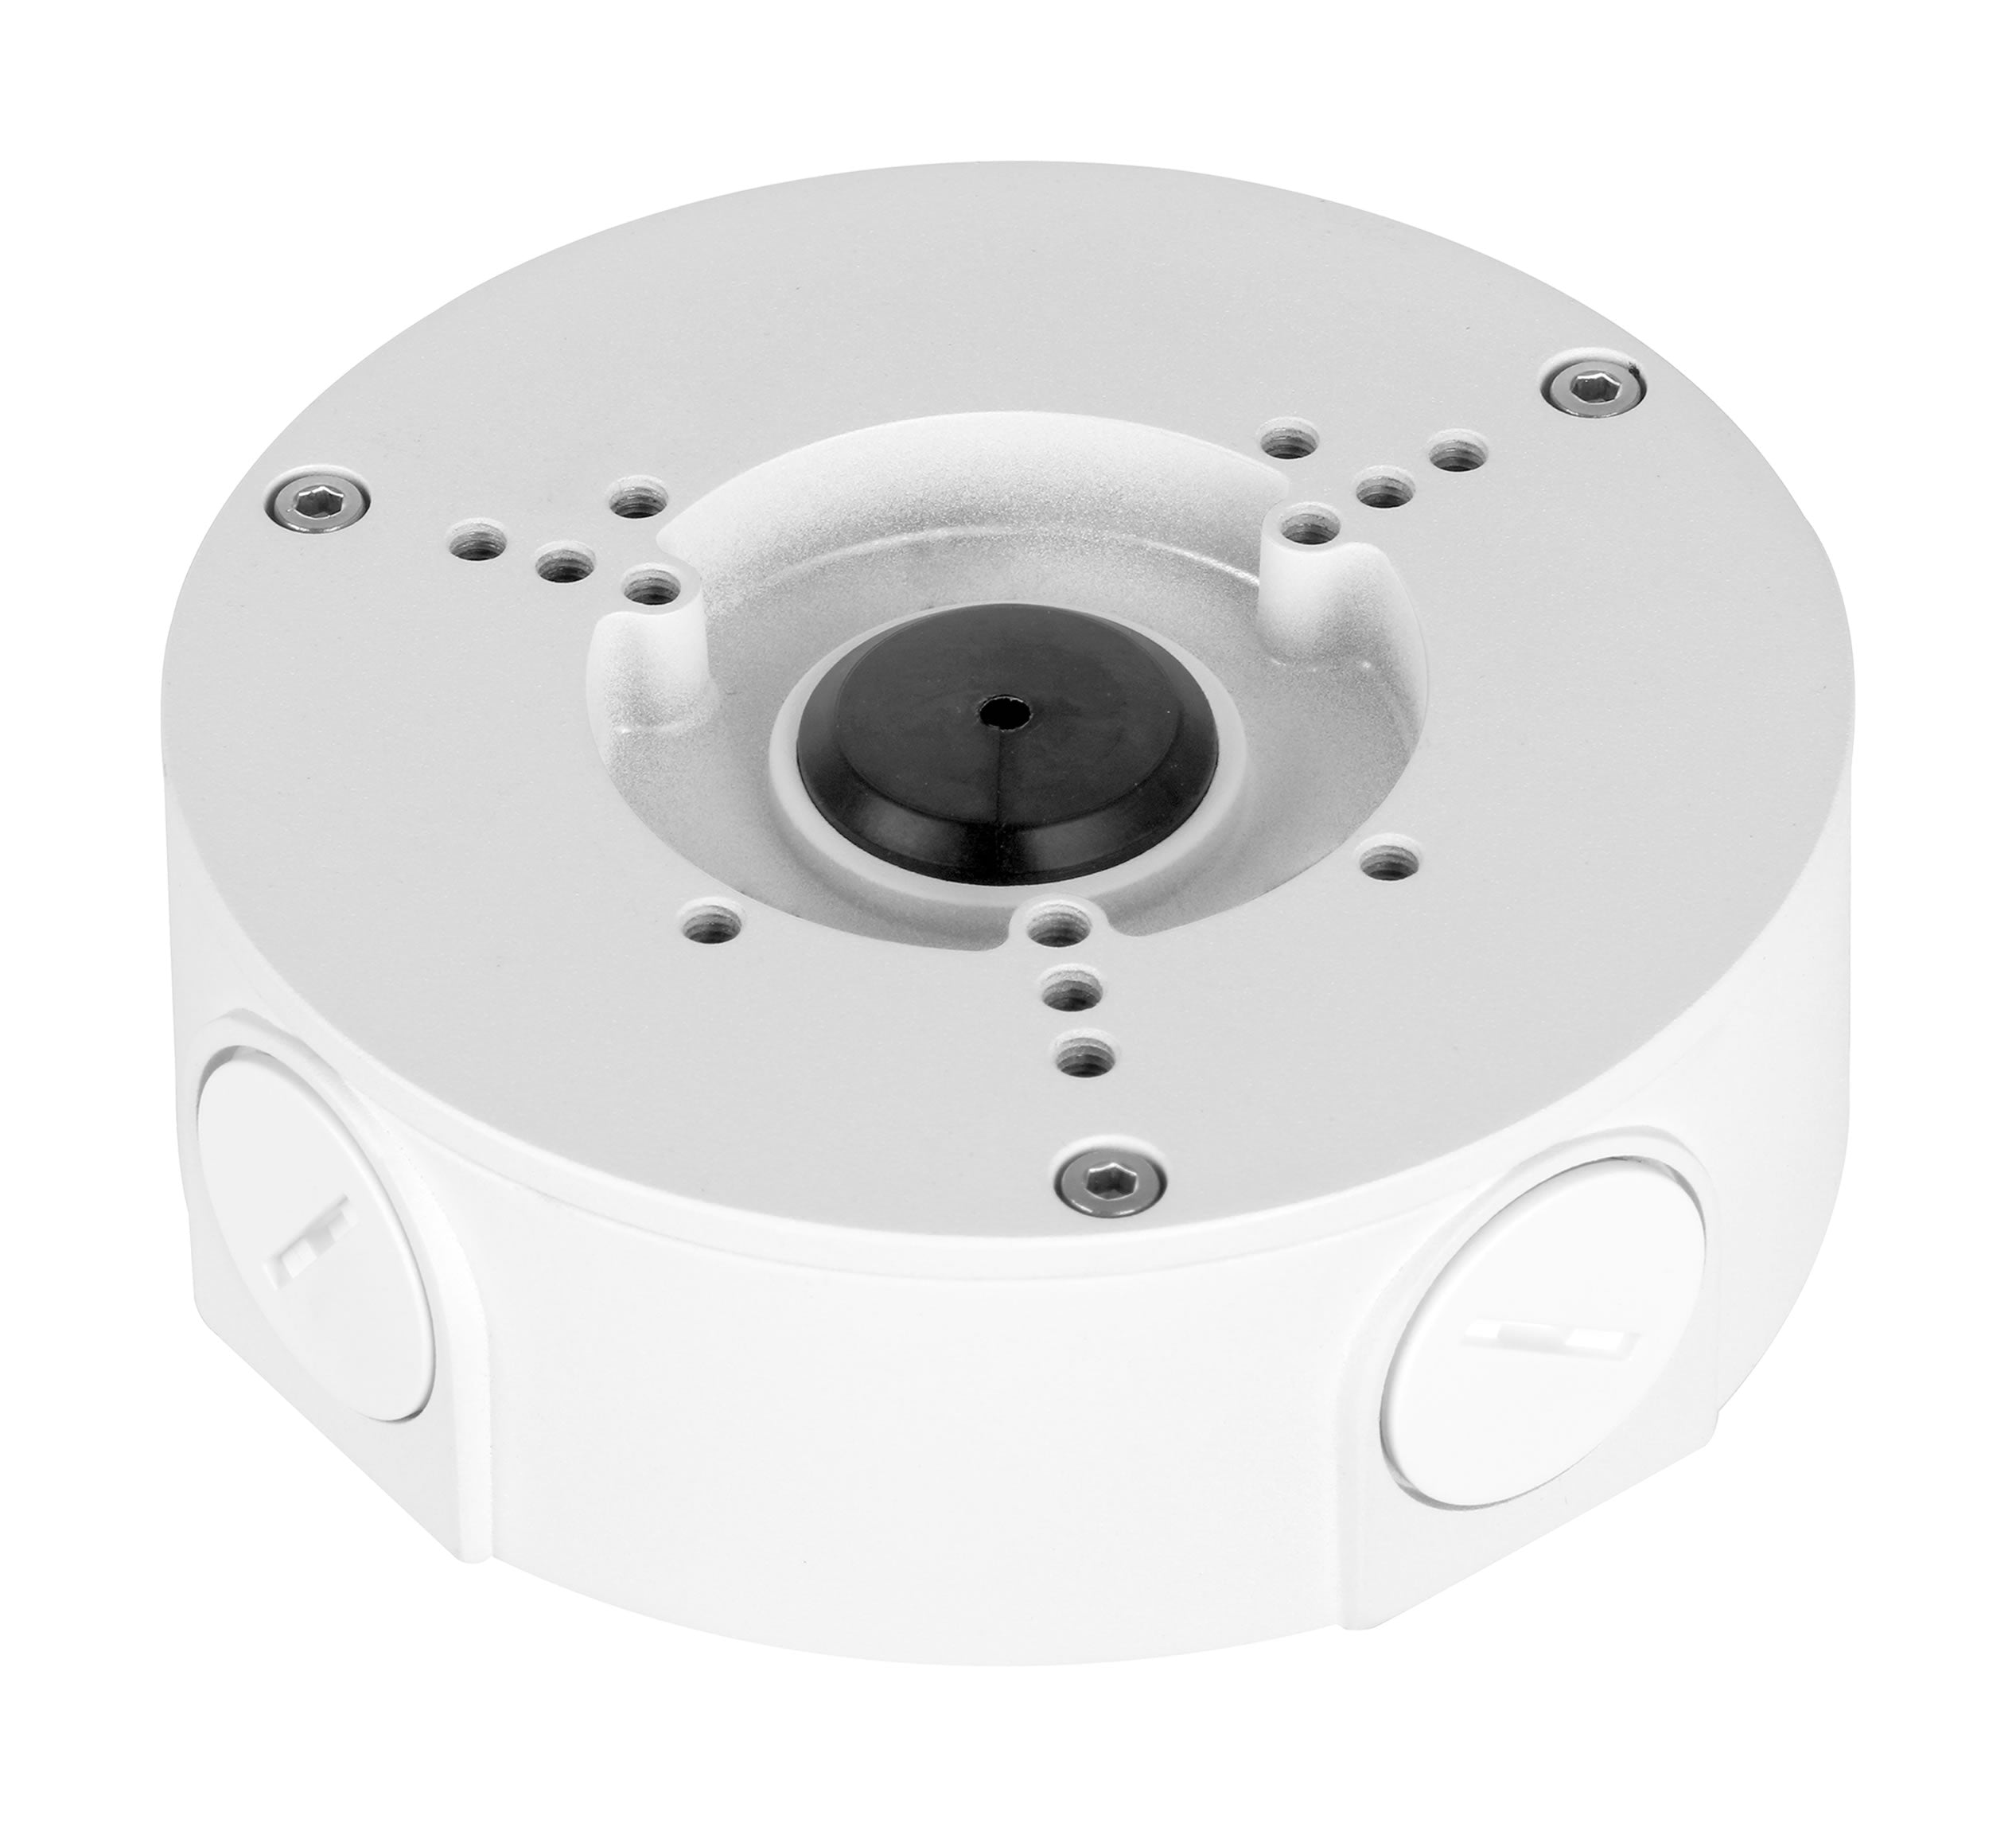 23-4FA130-E Water-proof Junction Box for Turret, Eyeball & Dome Camera